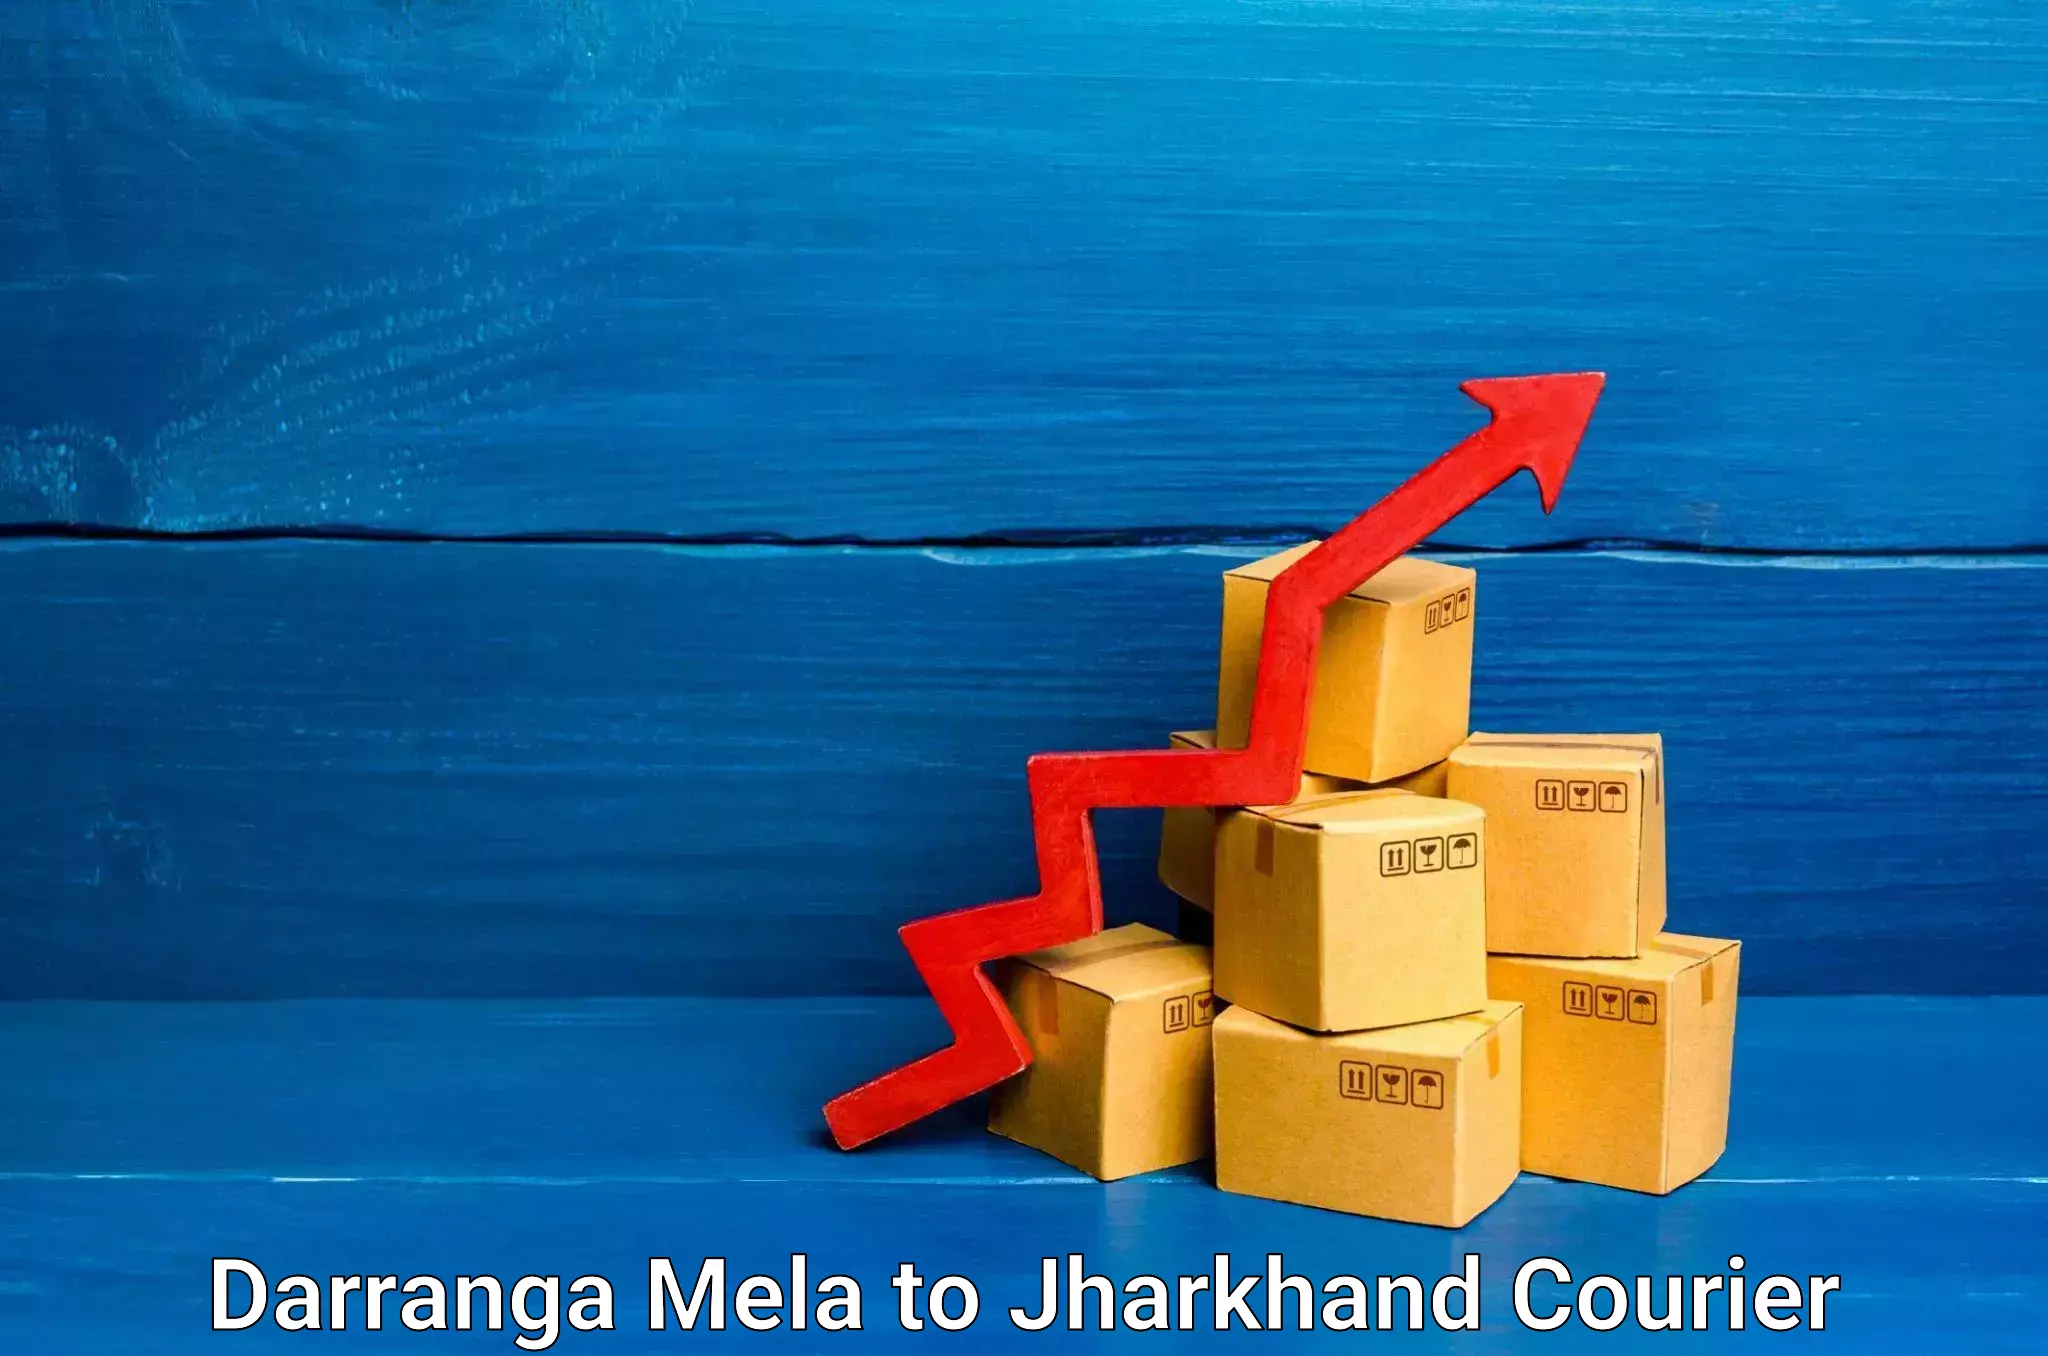 Flexible delivery scheduling Darranga Mela to Hazaribagh